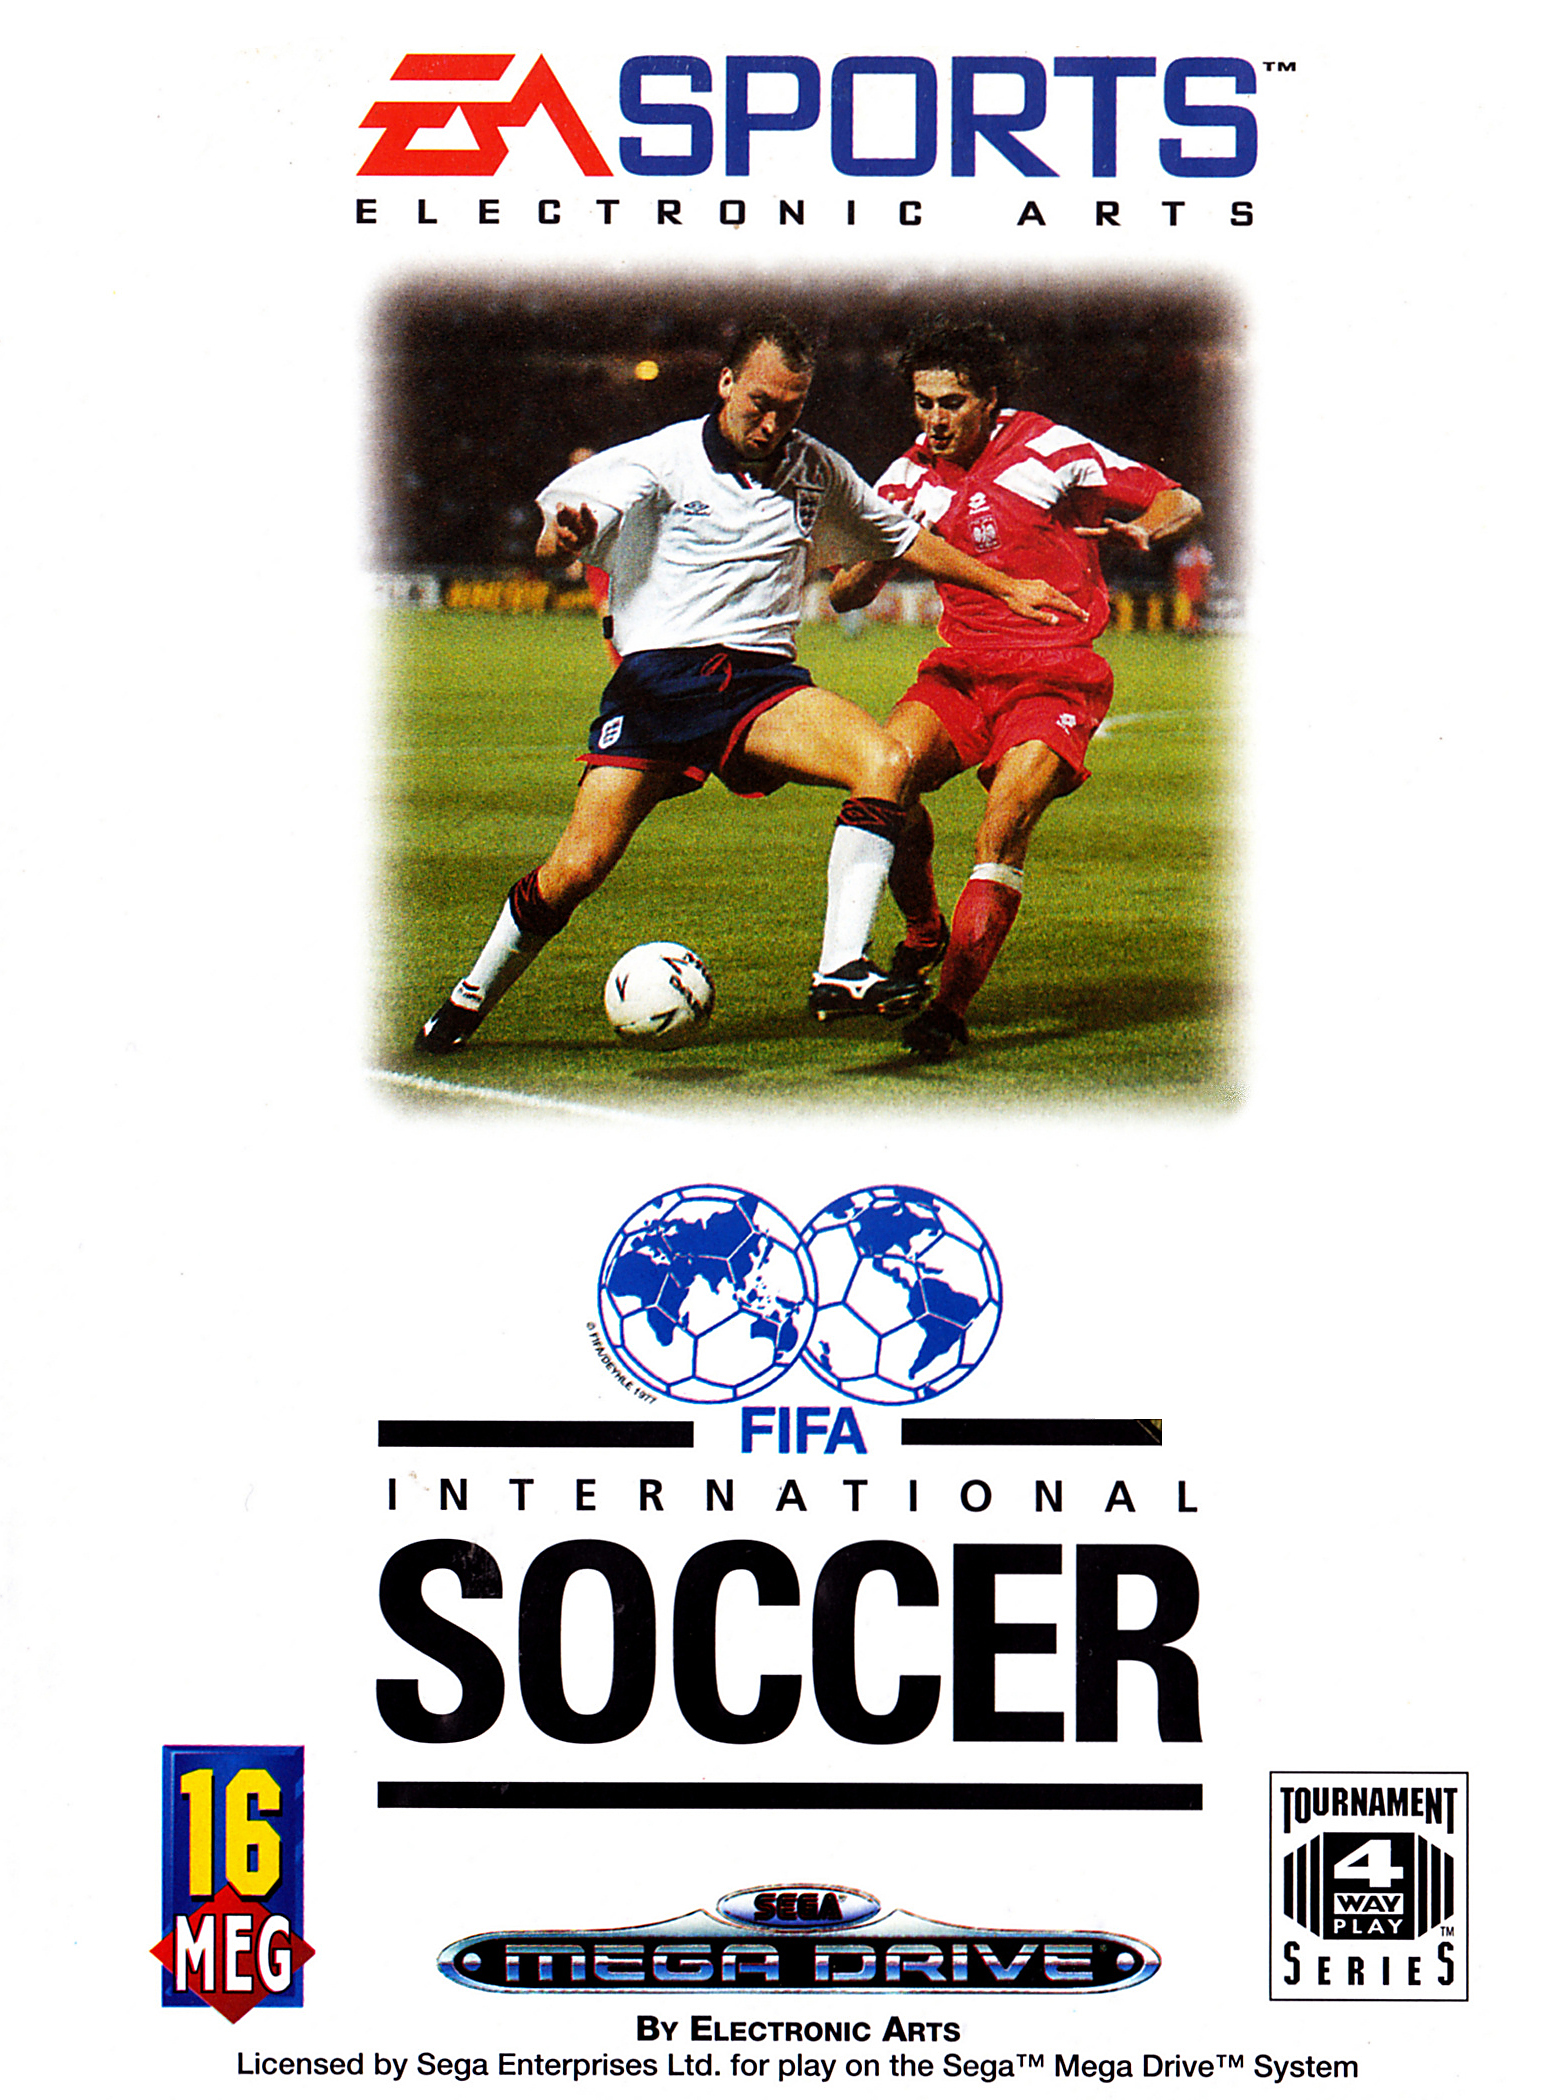 FIFA Football 2005 - Wikipedia